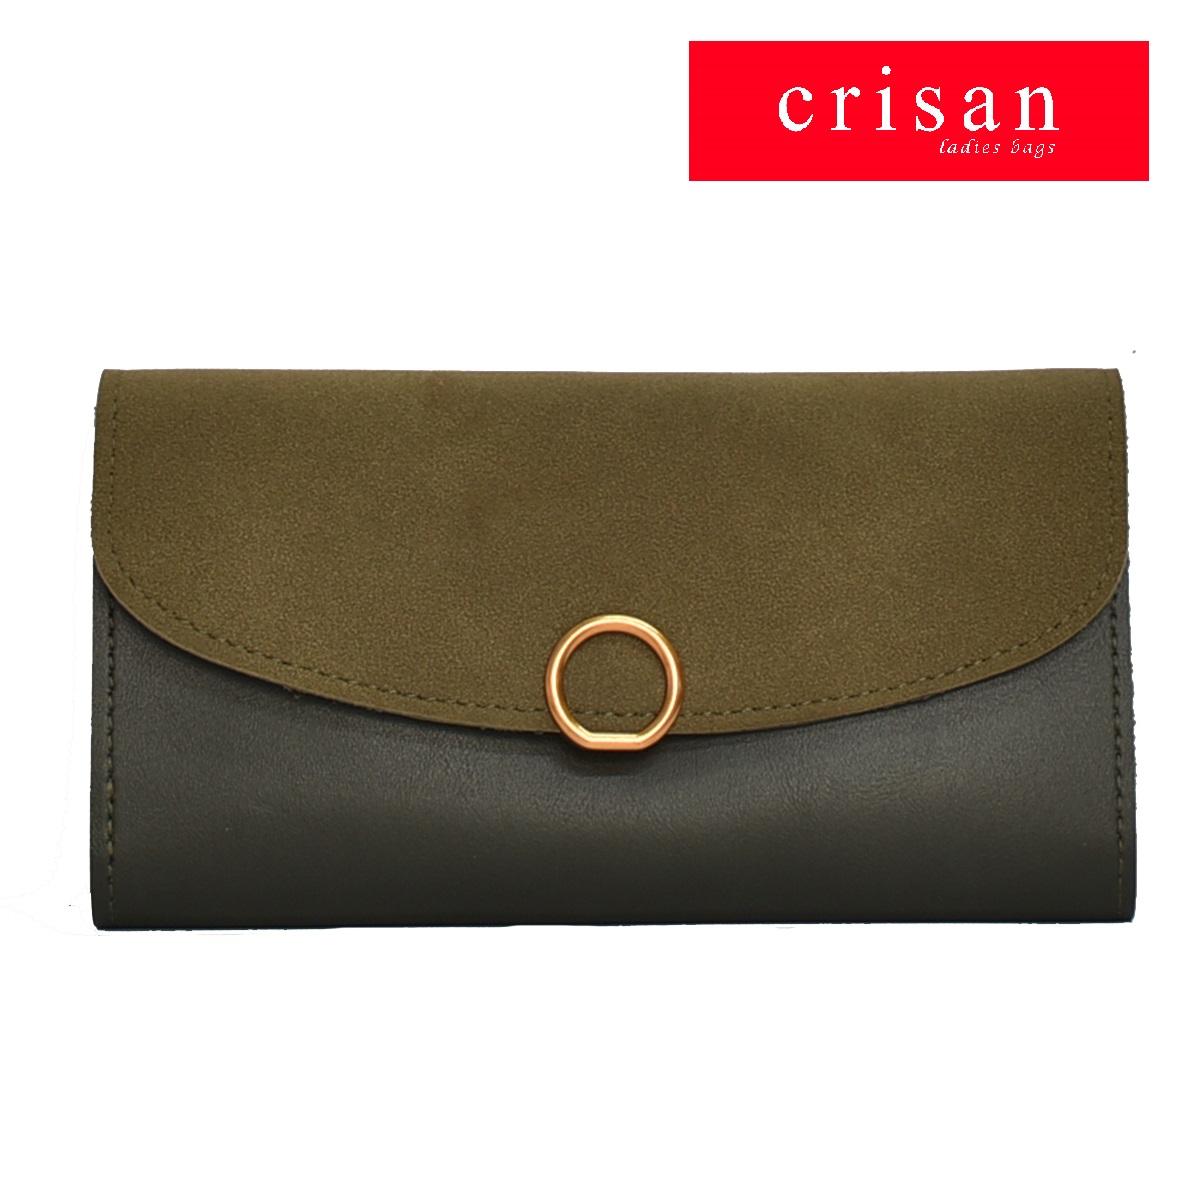 Crisan Bags - Gabrielle - Wallet-Crisan bags